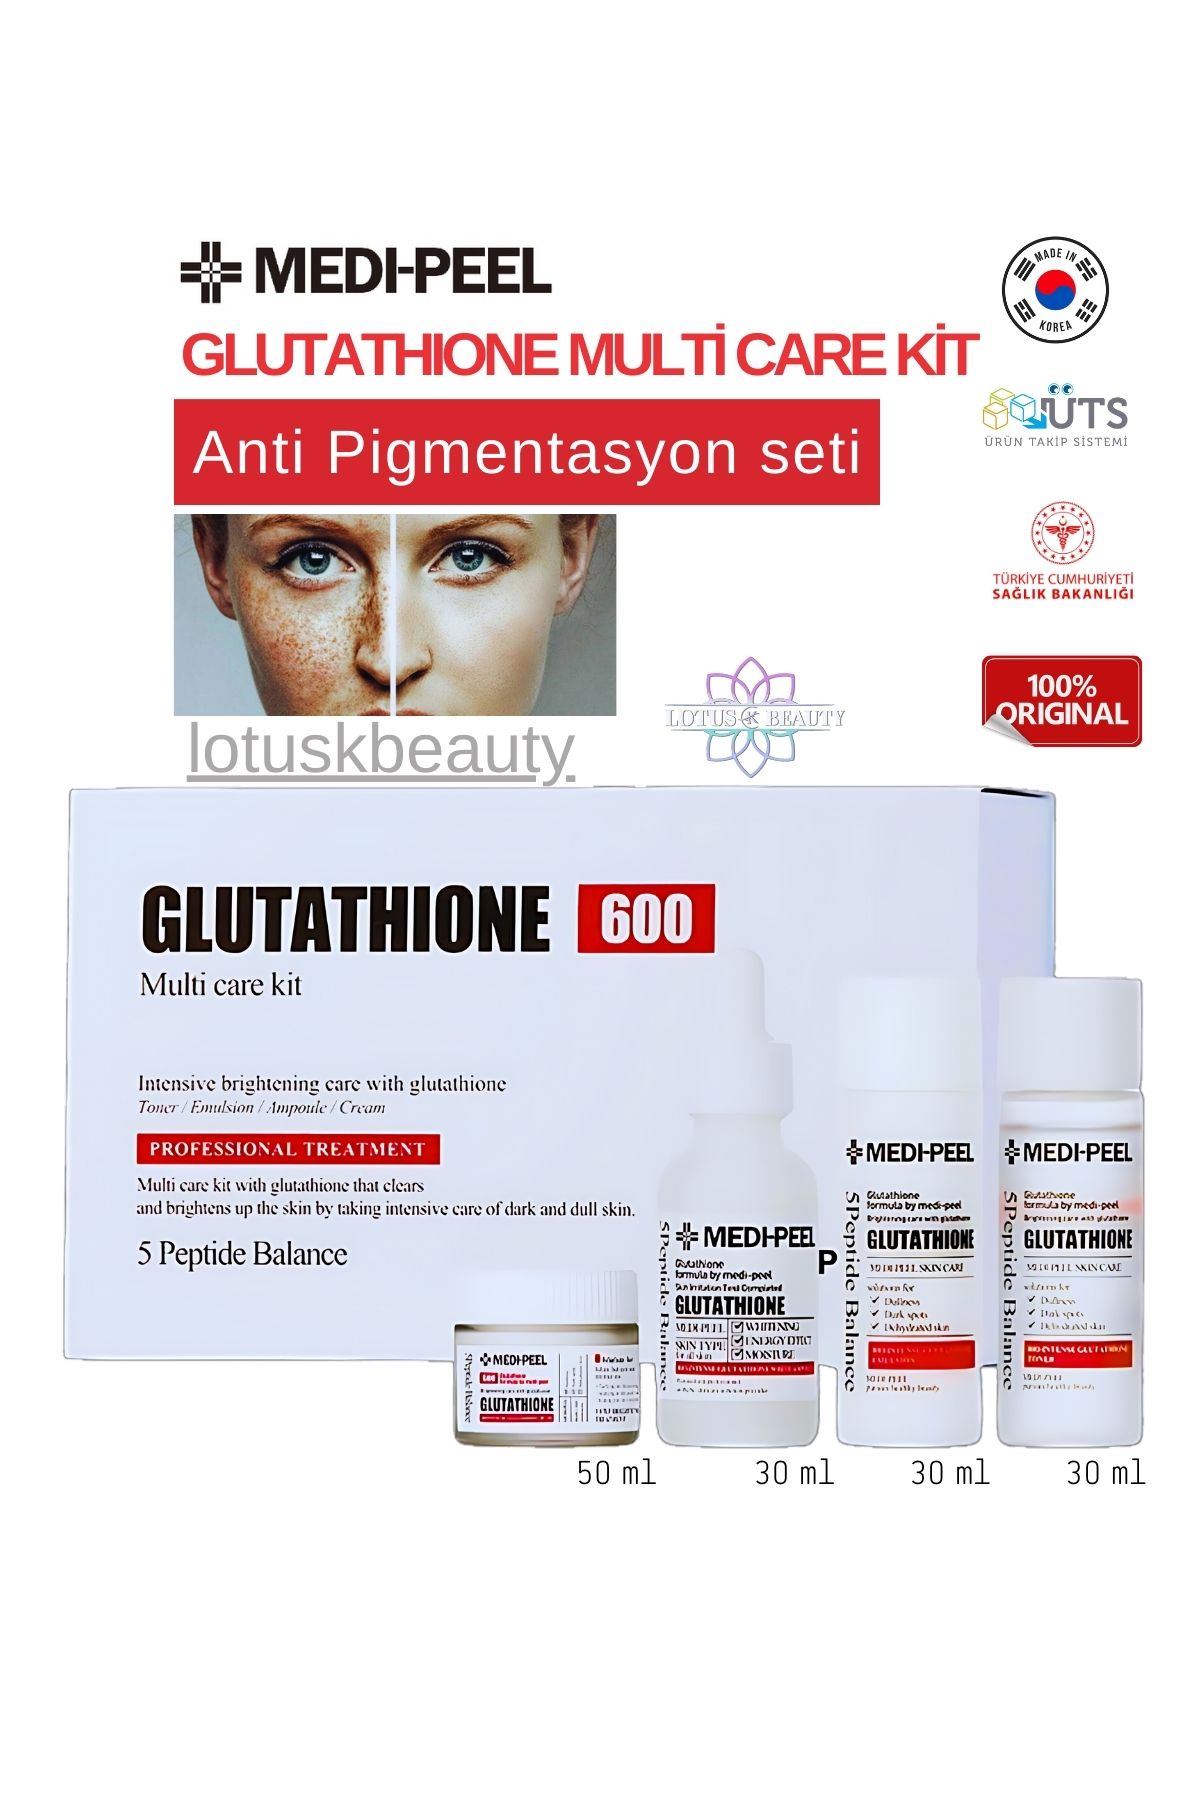 Medipeel Medi-peel Glutathione 30ml X 3 Adet, 50g X 1 - Hepsi Bir Arada Bakım Kiti.